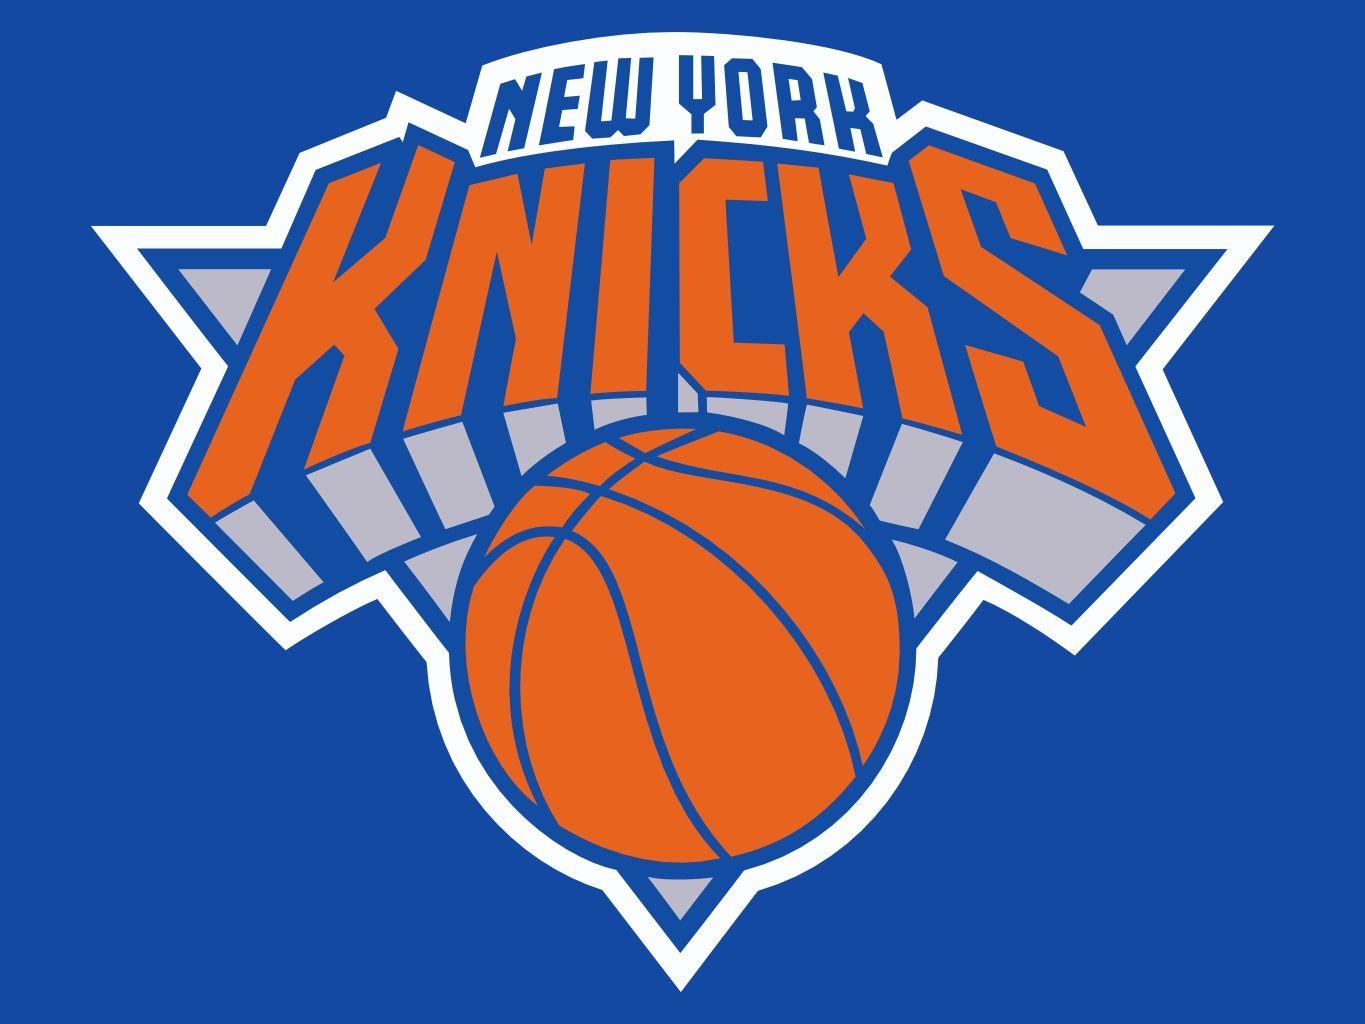 New York Knicks Wallpaper PC Desktop. Full HD Picture